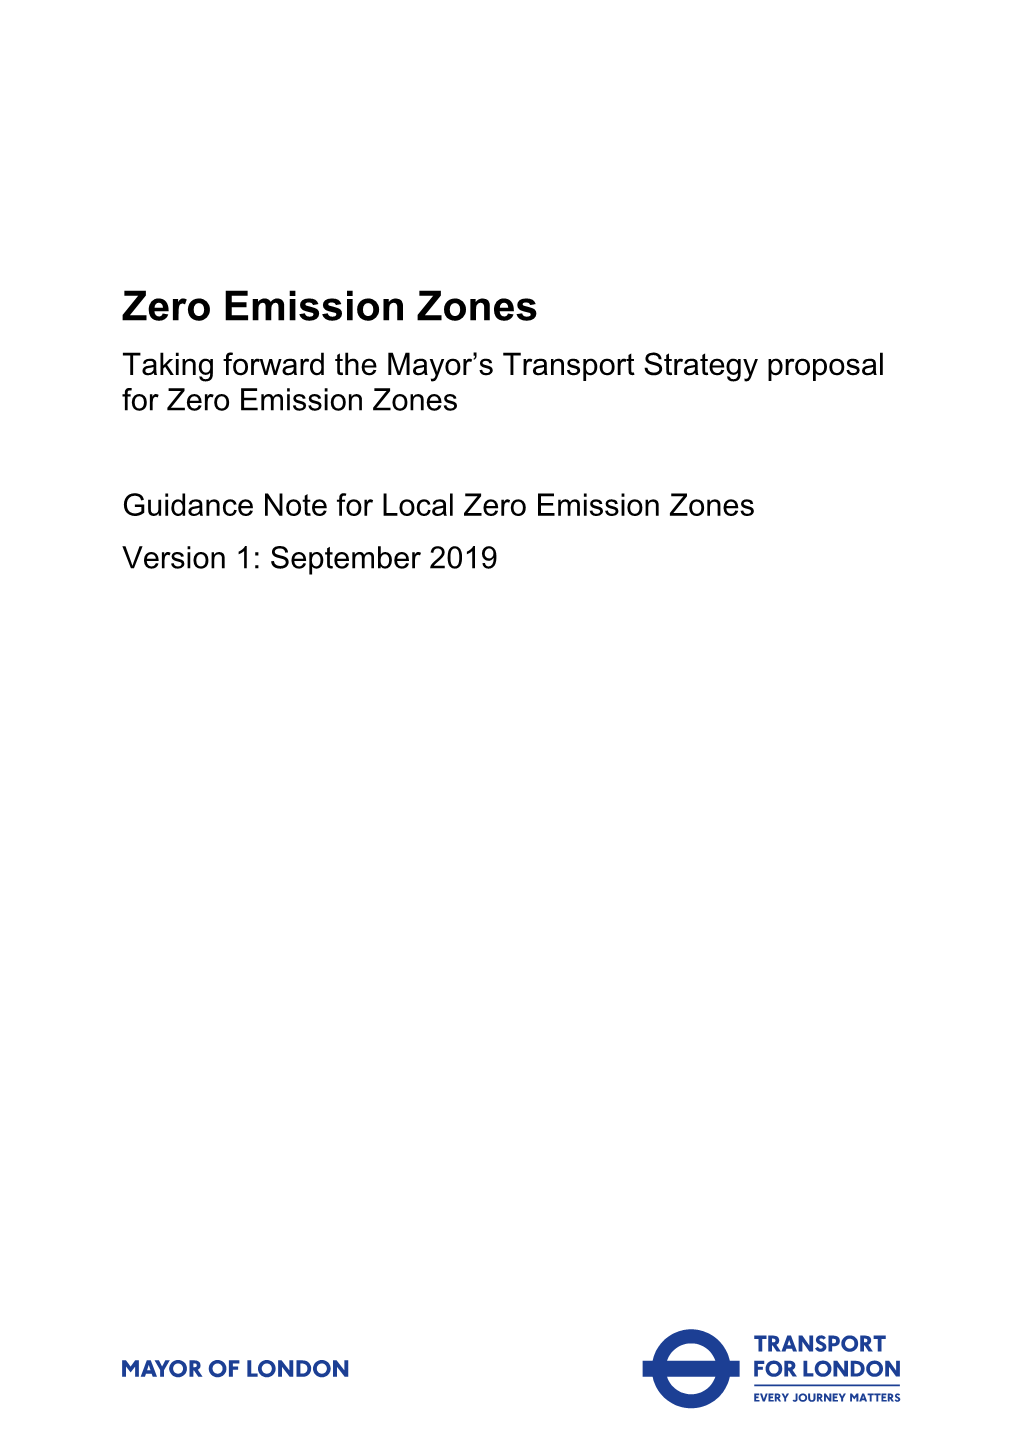 Guidance for Local Zero Emission Zones